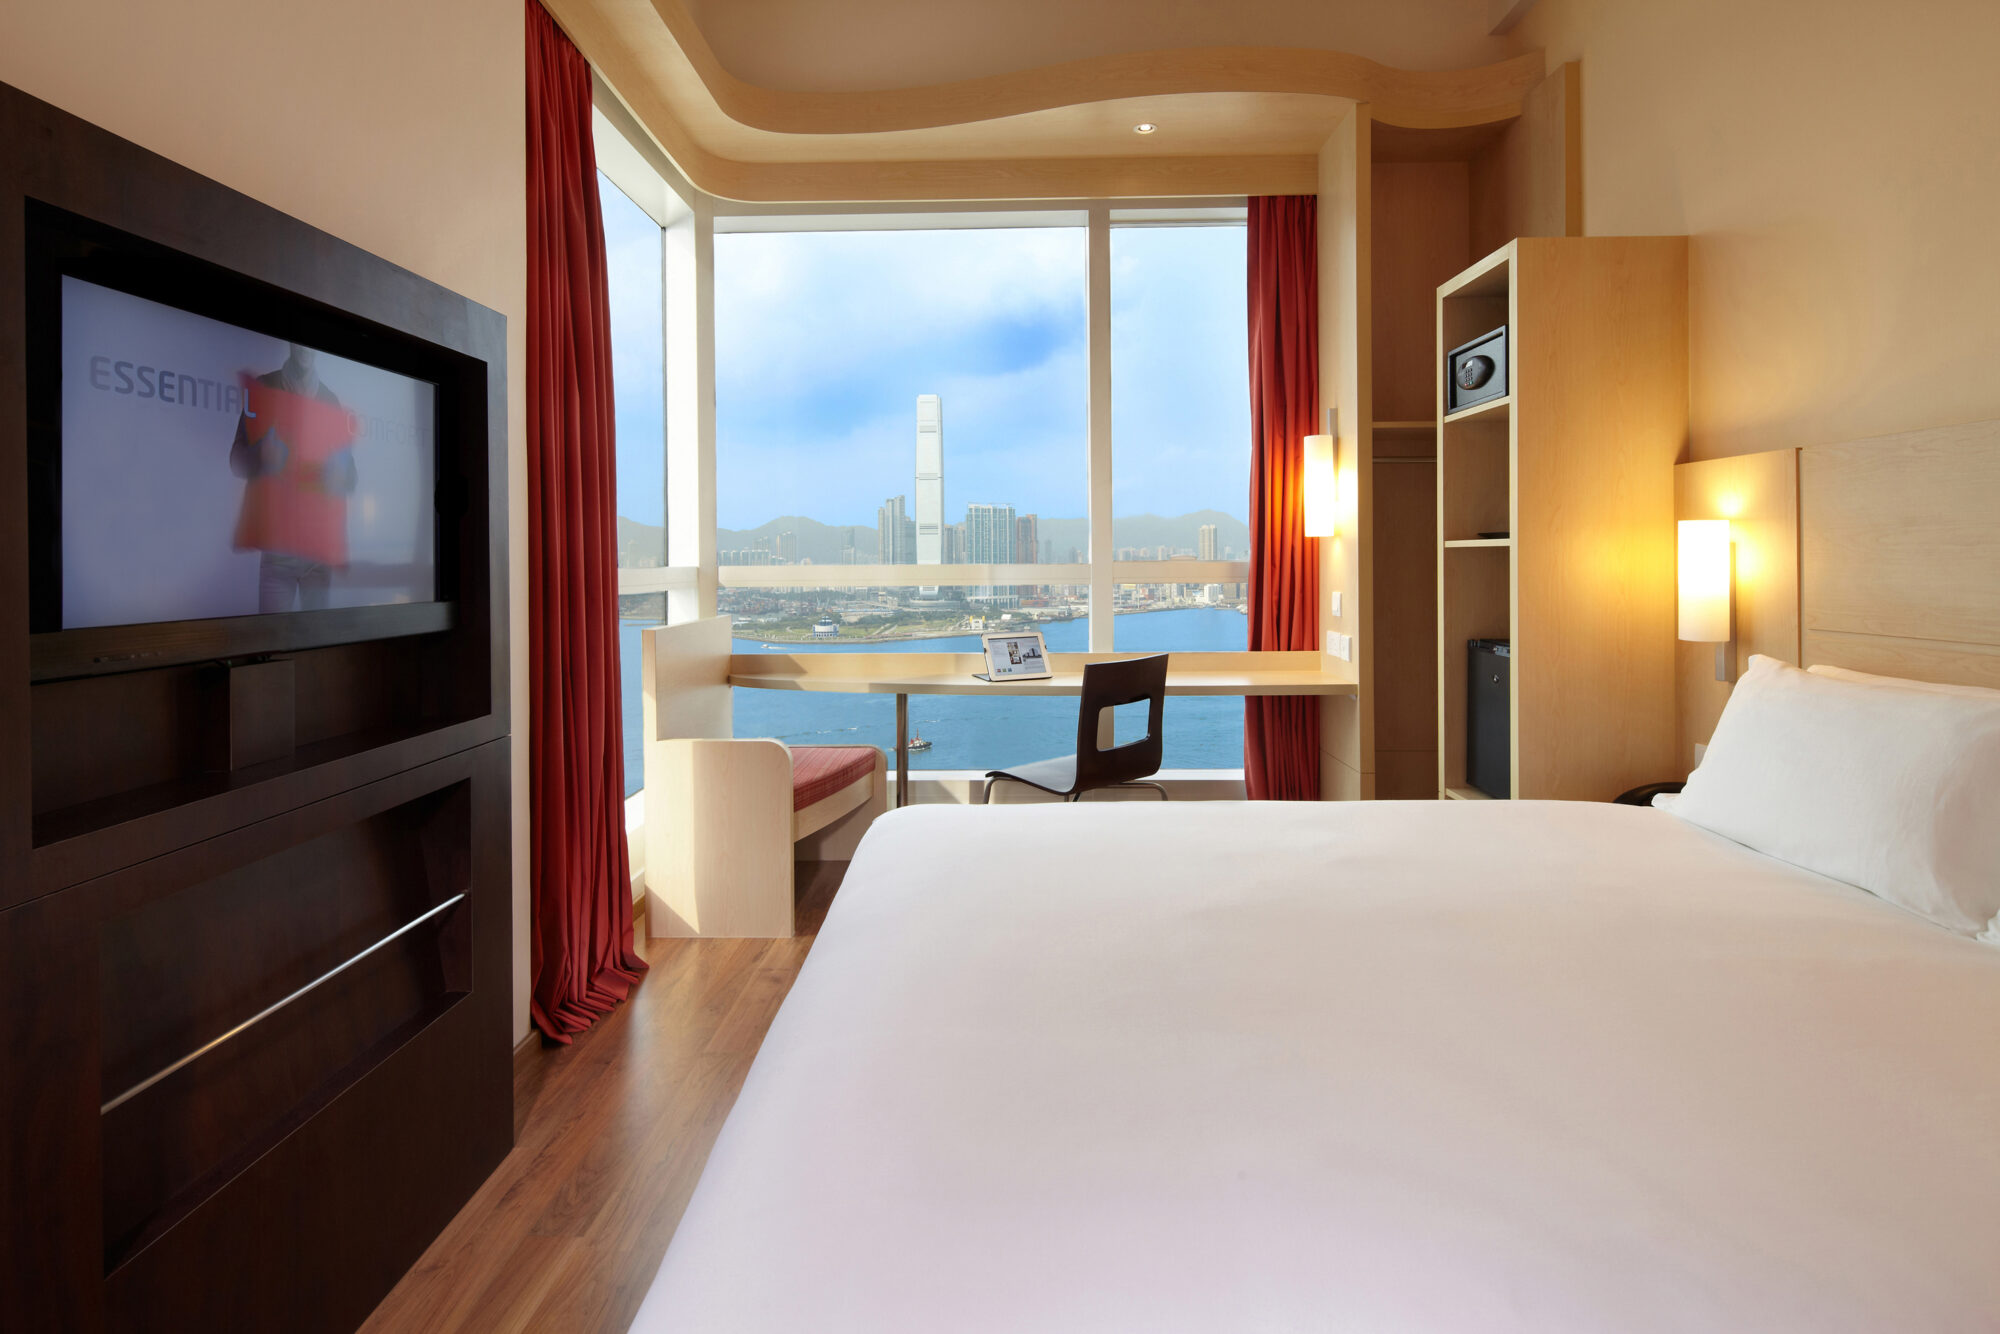 宜必思香港中上环酒店 Ibis HK Central - harbour view queen bedroom 02.jpg